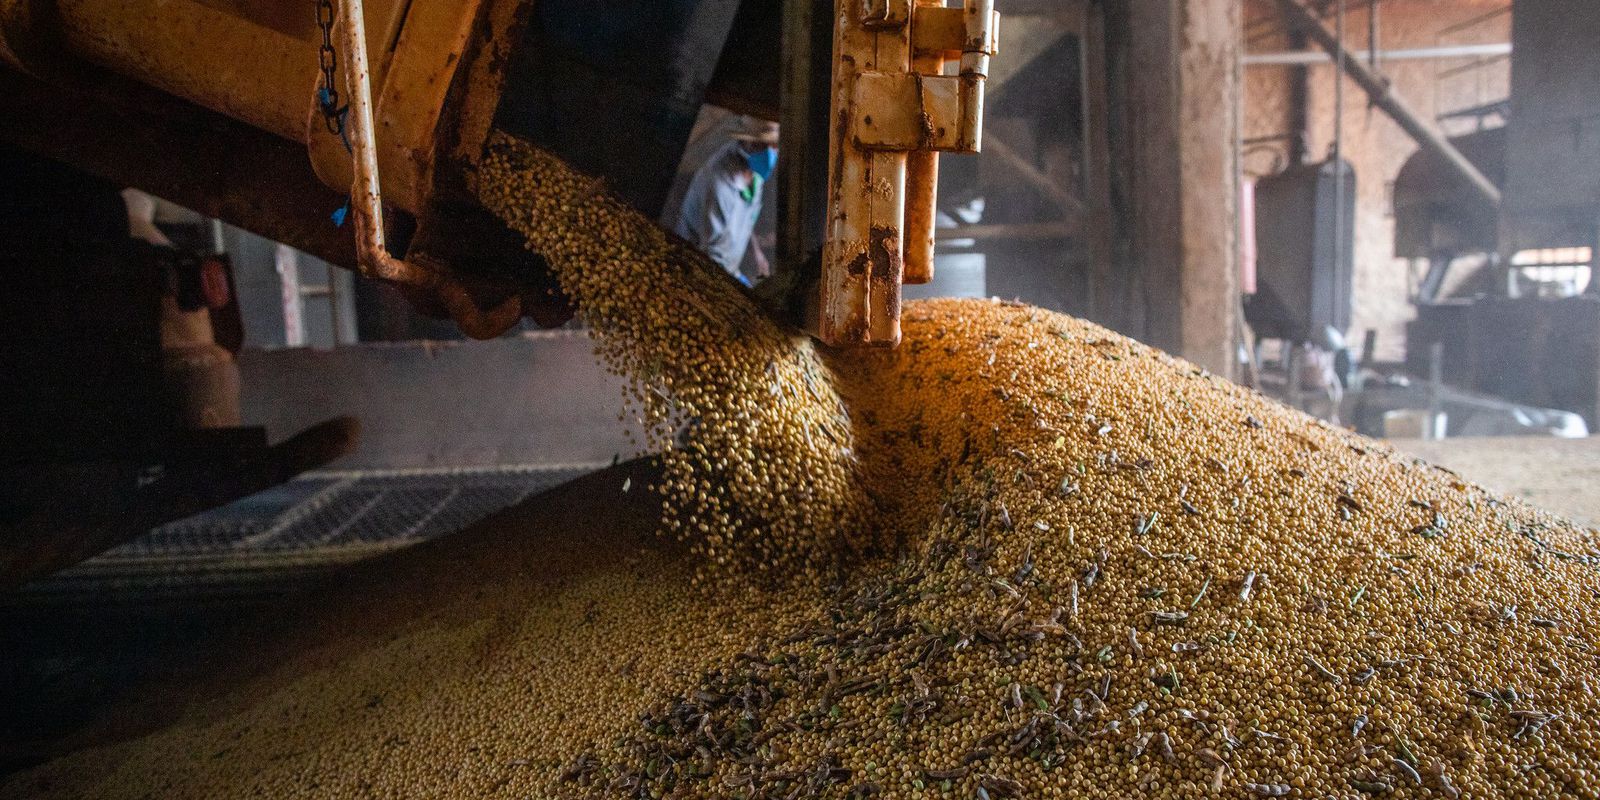 Conab estimates grain harvest of 265.7 million tons